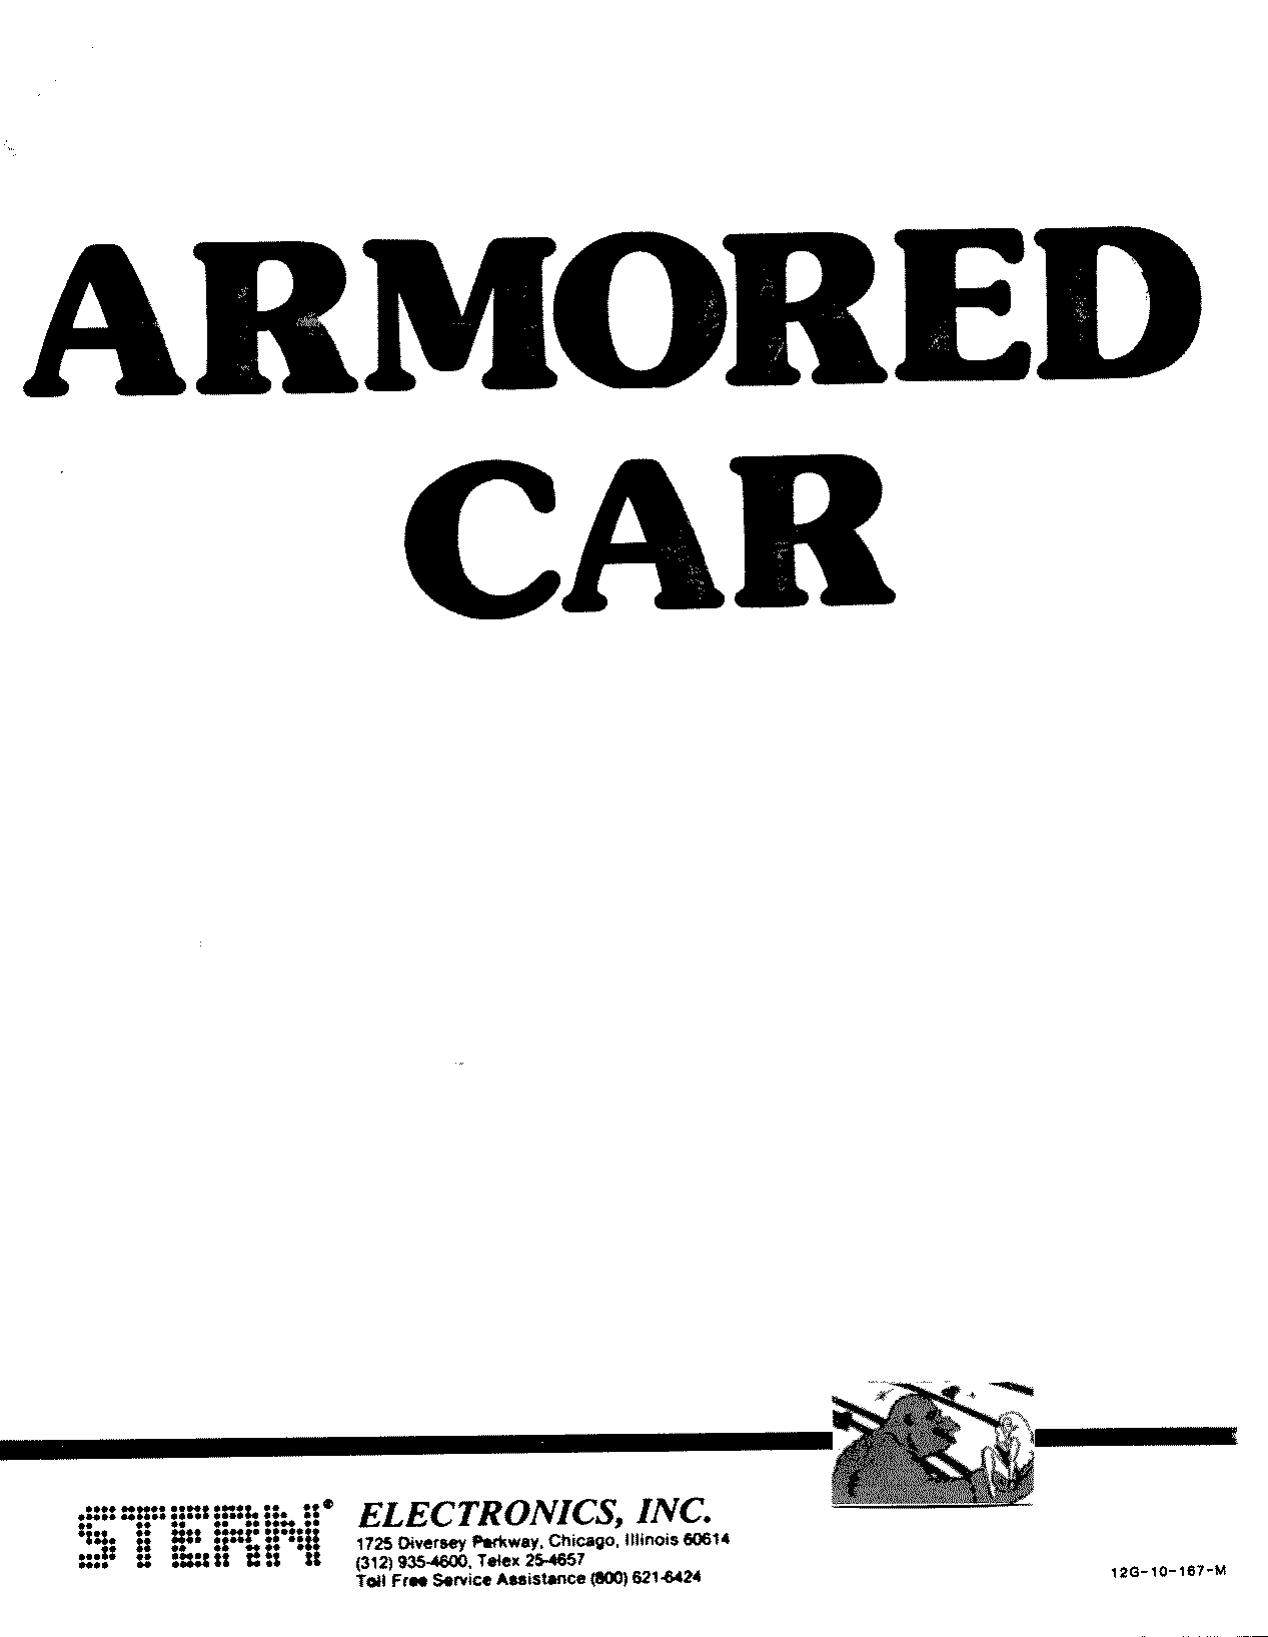 Armored Car.man